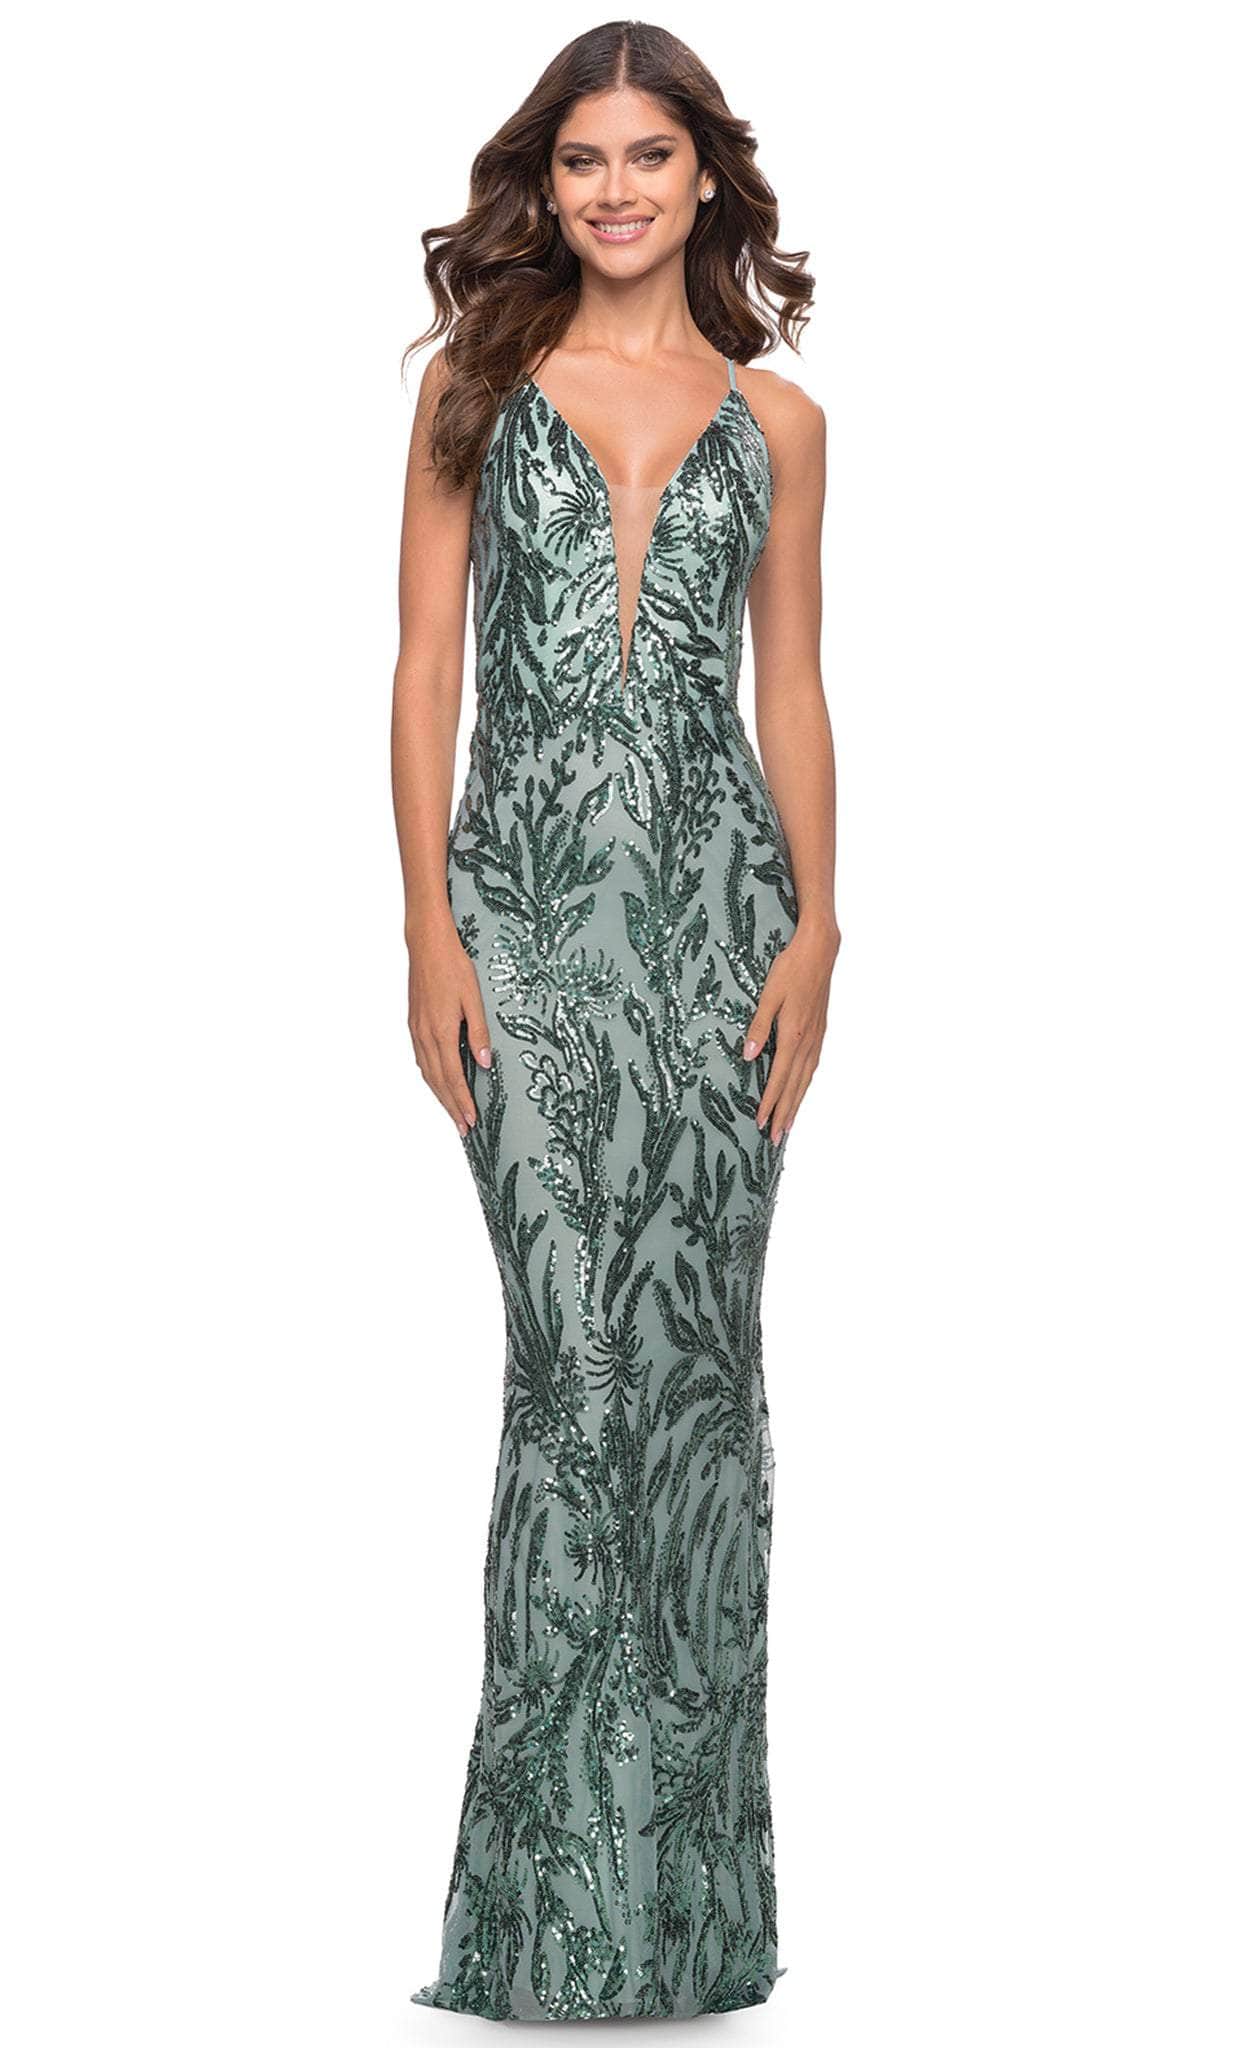 La Femme 31522 - Leaf Motif Sequined Sheath Gown
